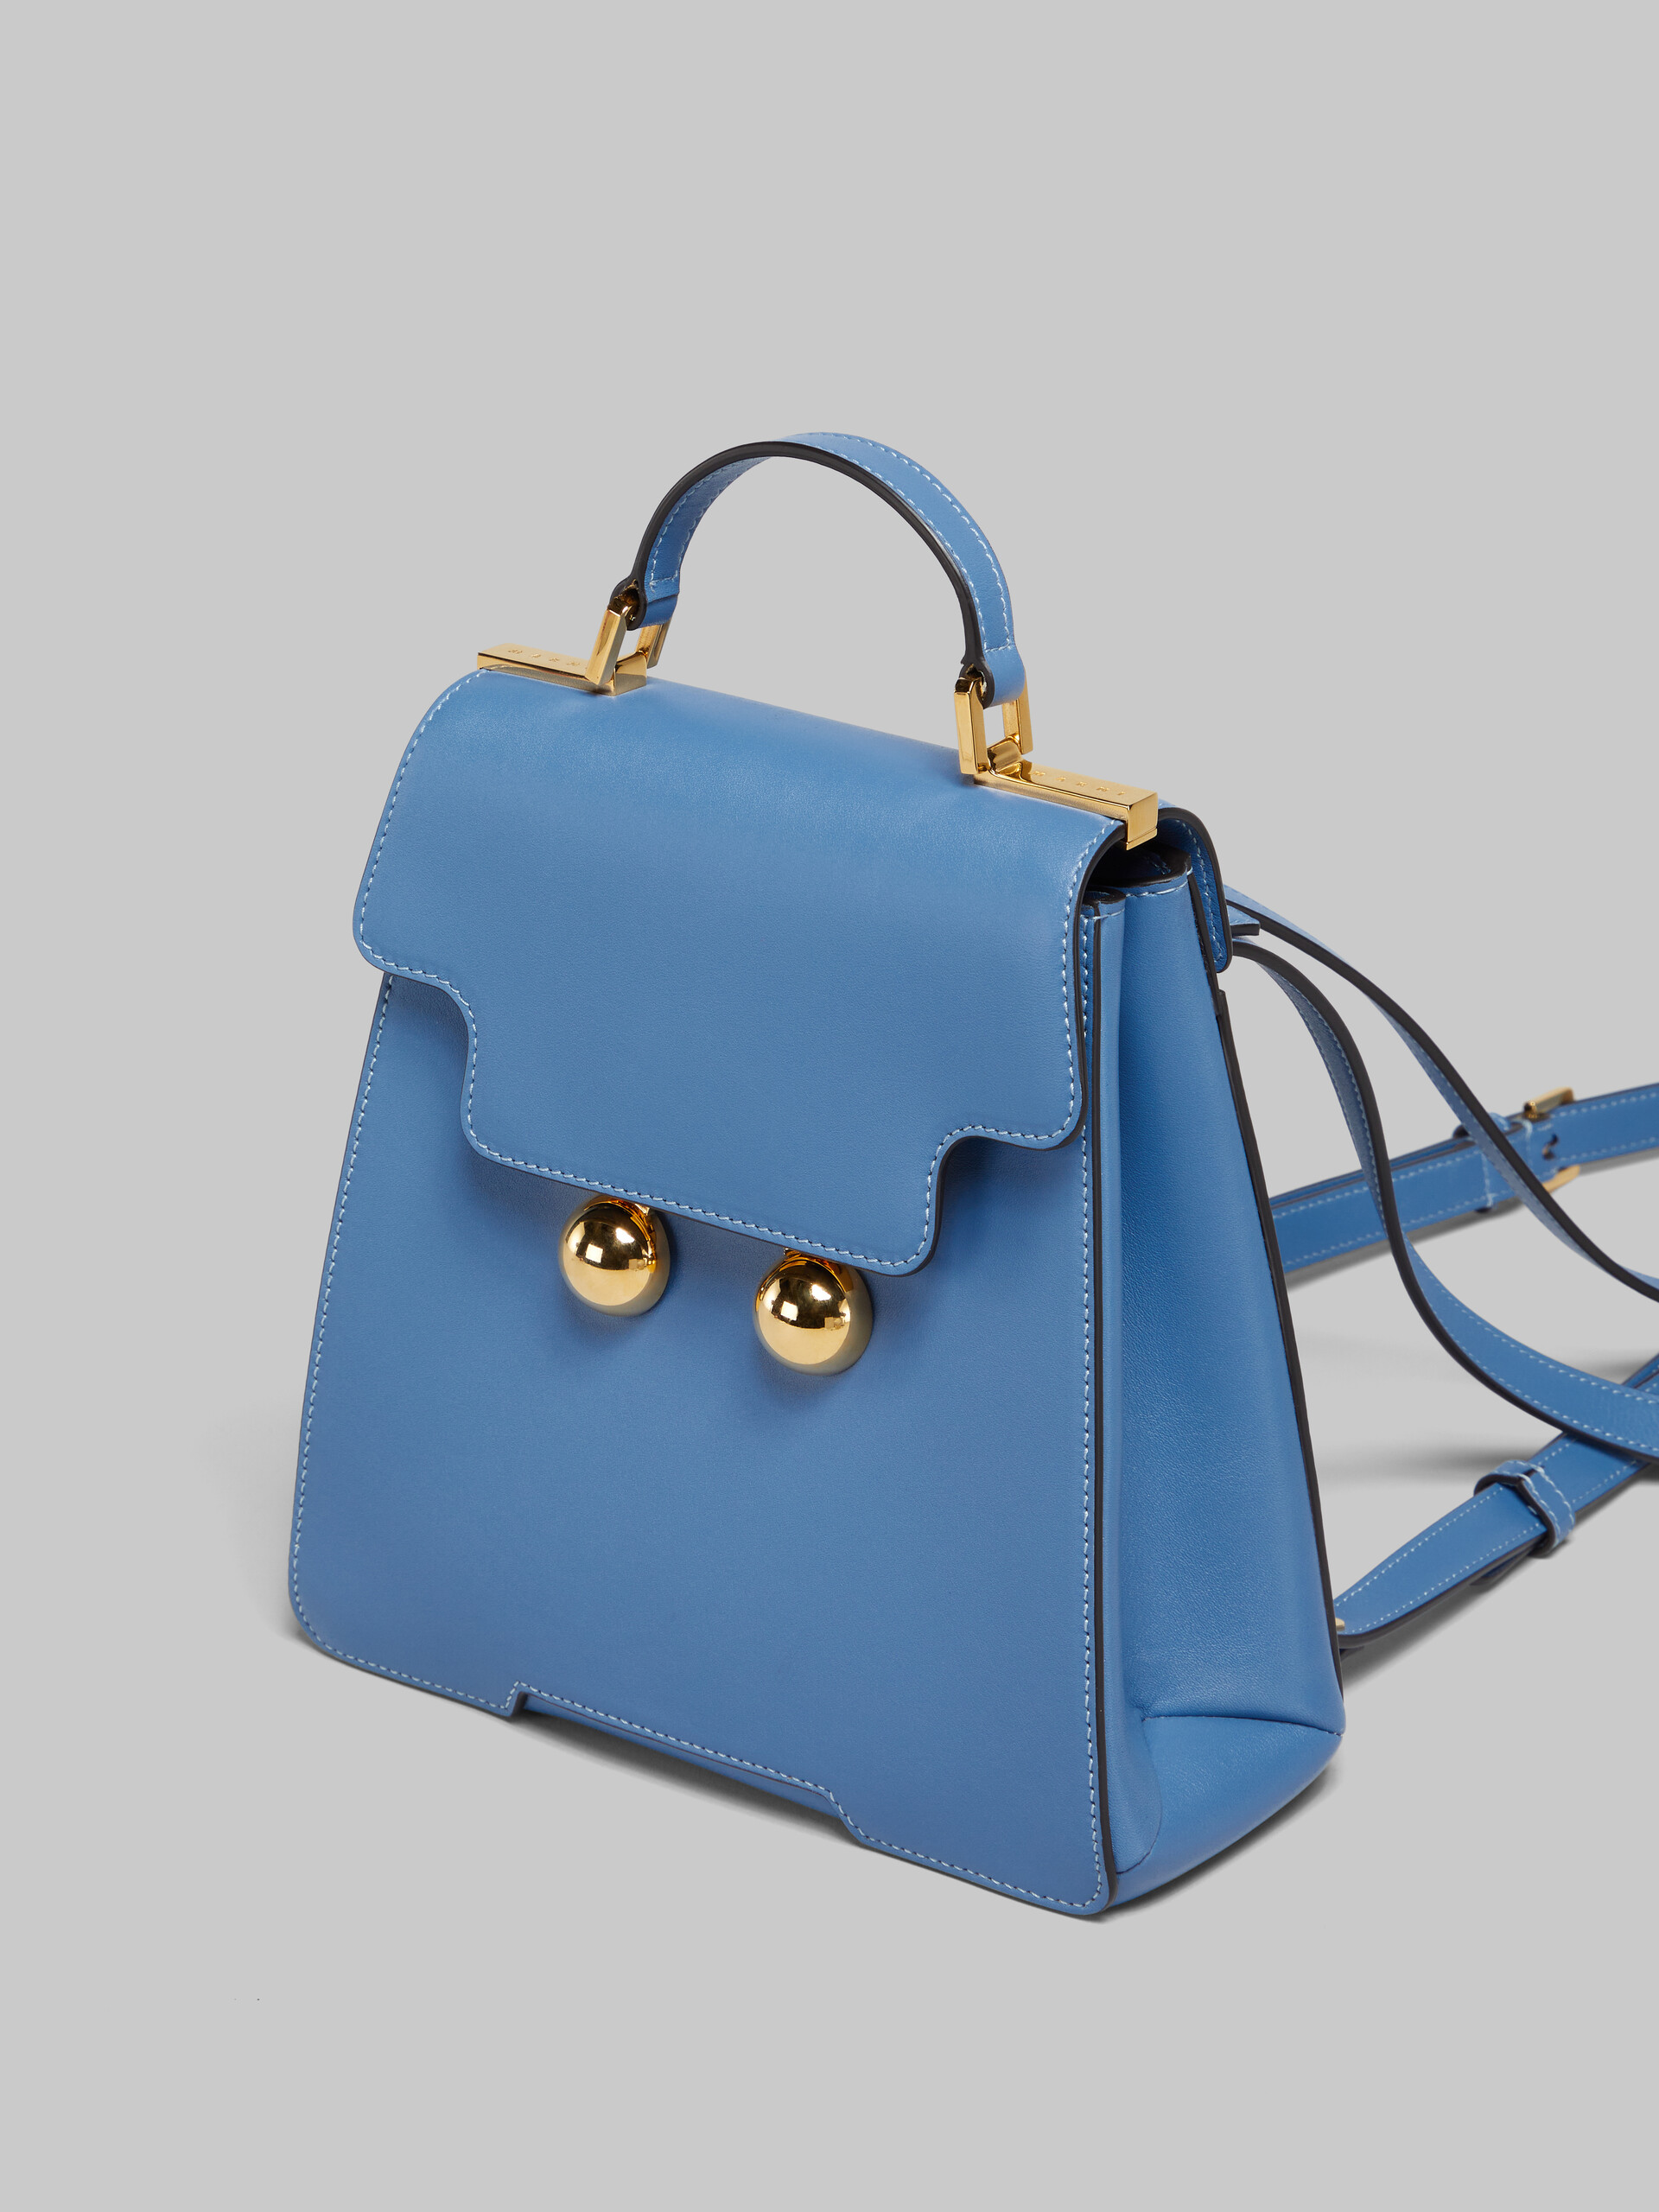 Blue leather Trunkaroo backpack - Backpack - Image 4